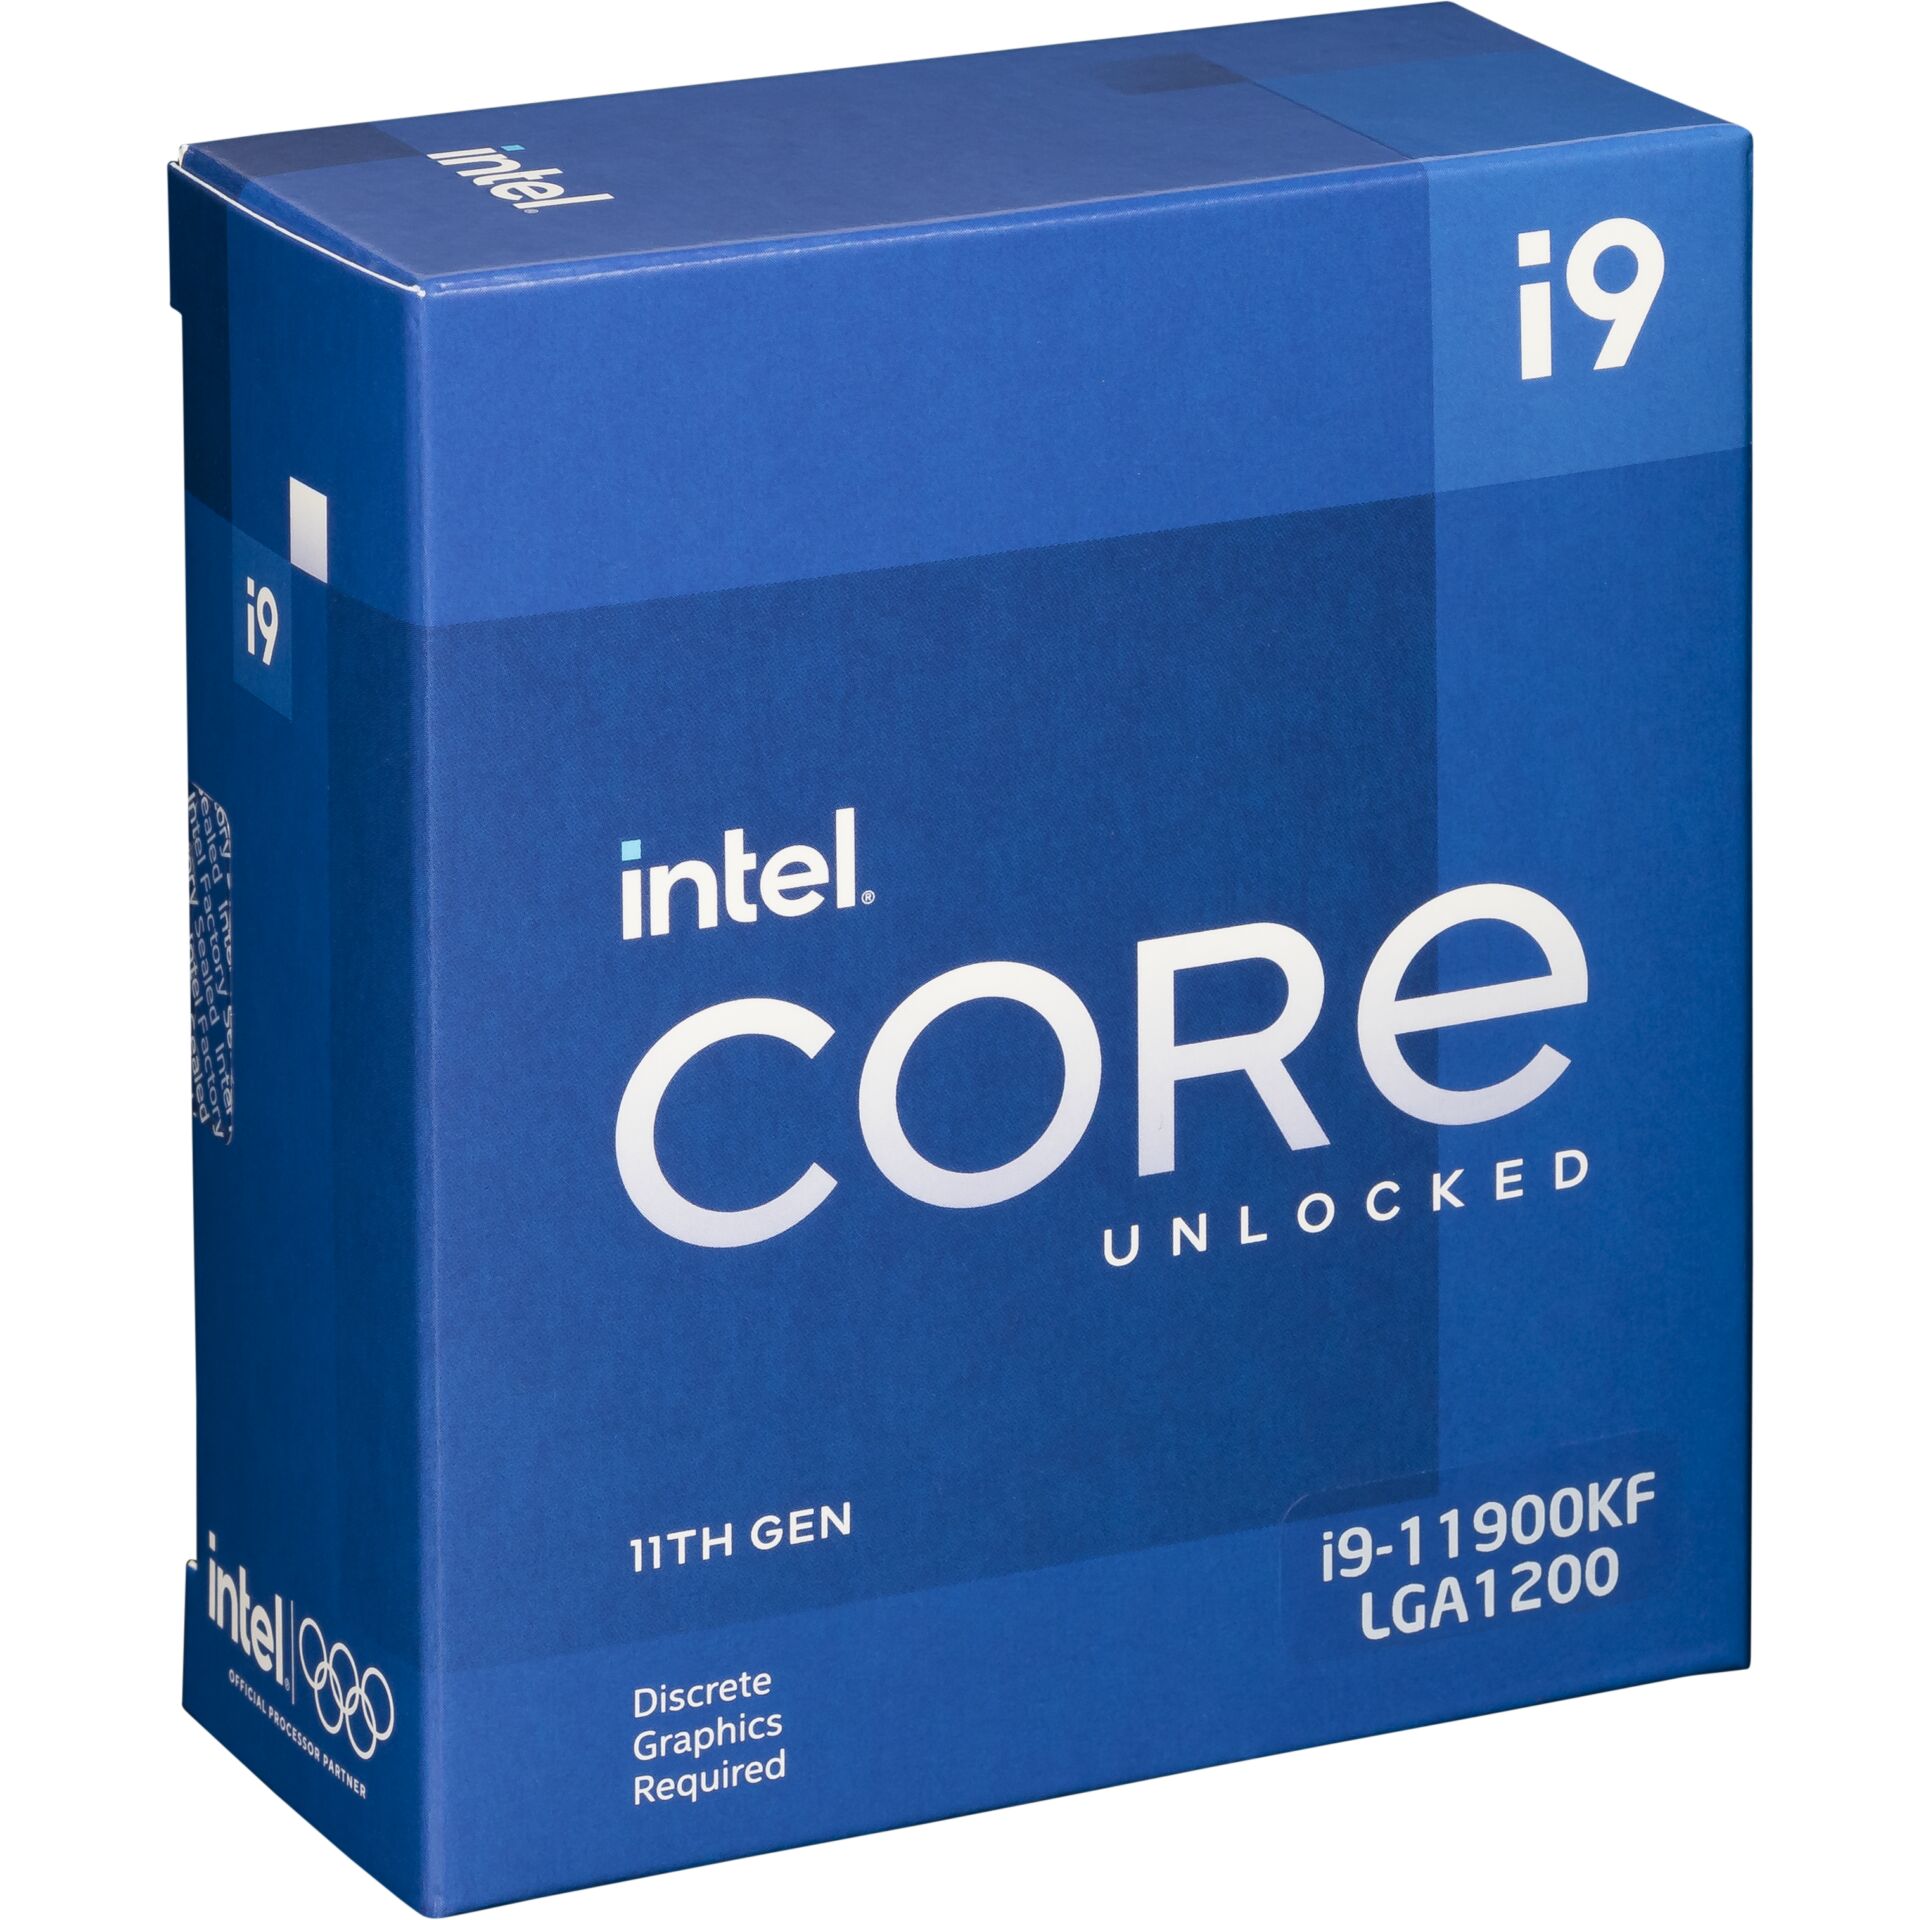 Intel Core i9-11900KF, 8C/16T, 3.50-5.30GHz, boxed Sockel 1200 (LGA), Rocket Lake-S CPU